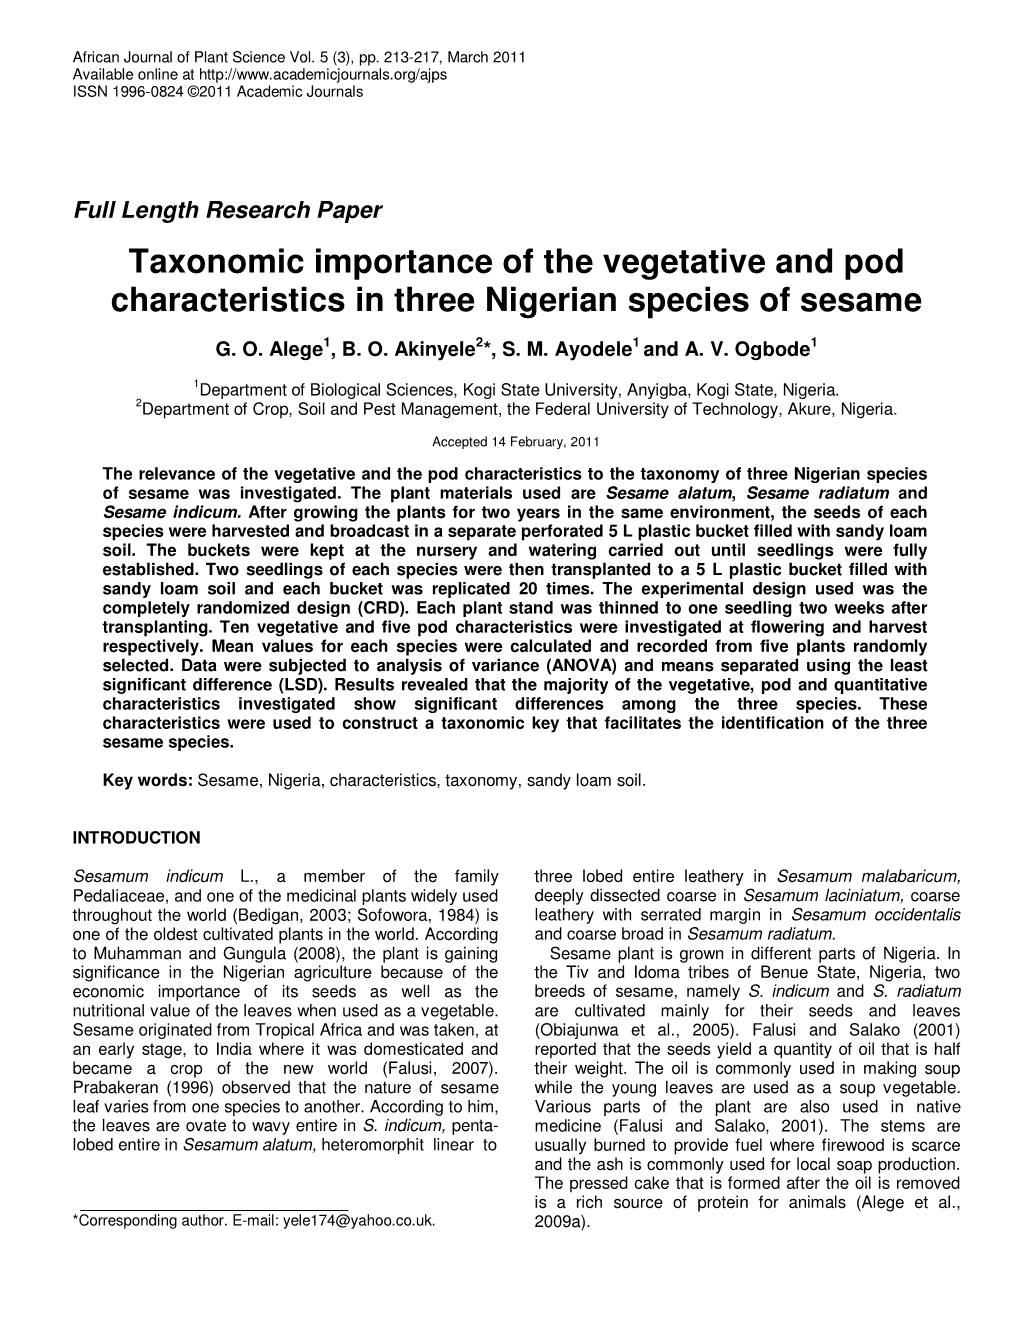 Taxonomic Importance of the Vegetative and Pod Characteristics in Three Nigerian Species of Sesame